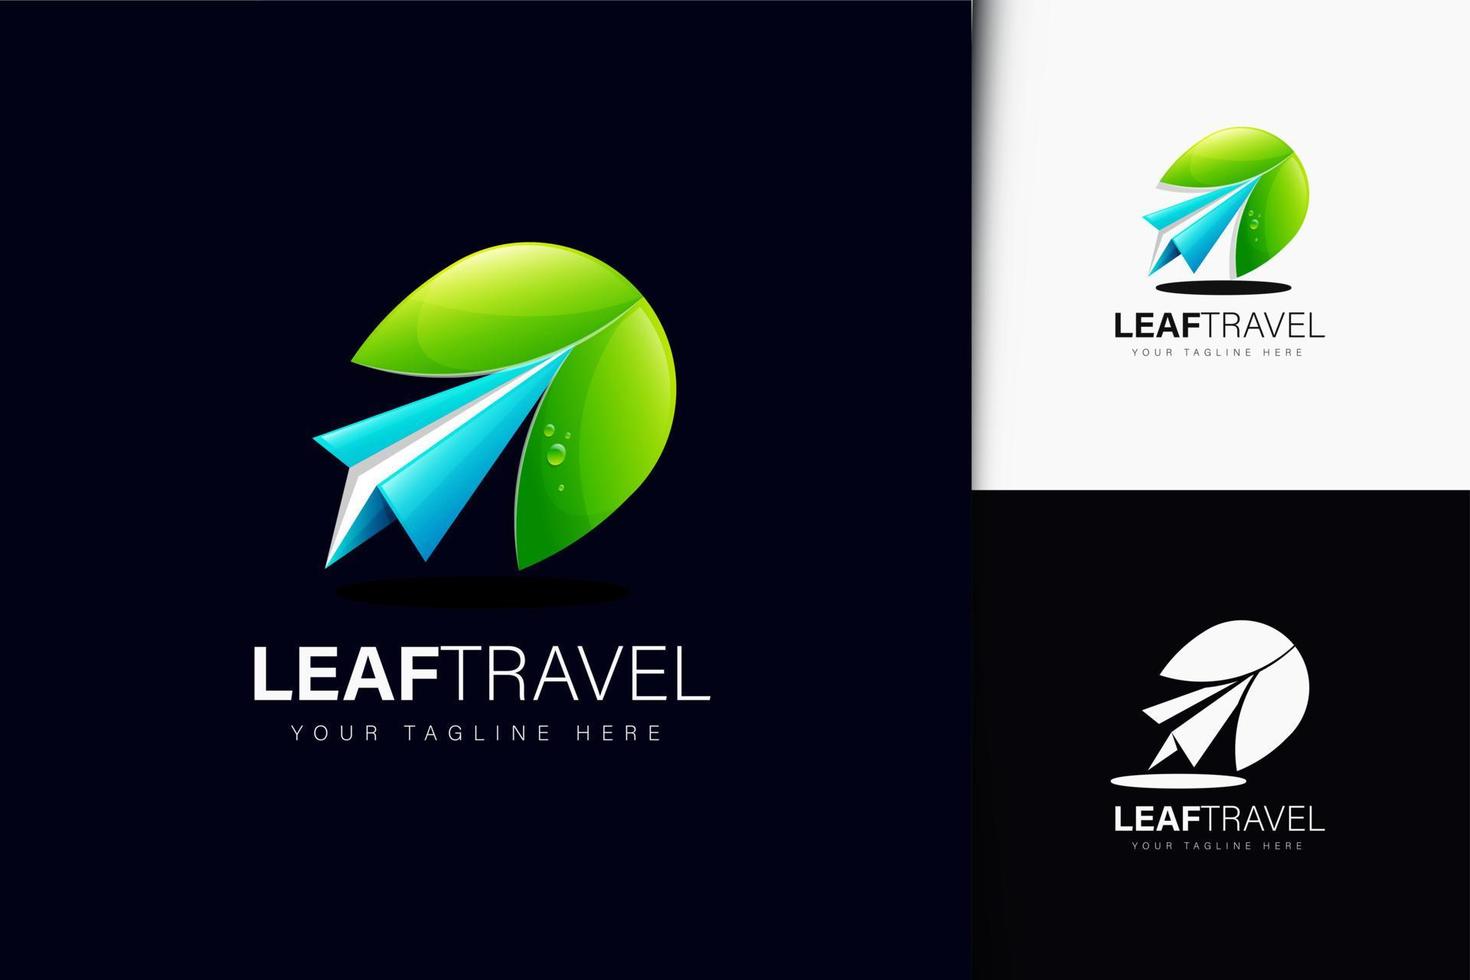 Leaf travel logo design with gradient vector